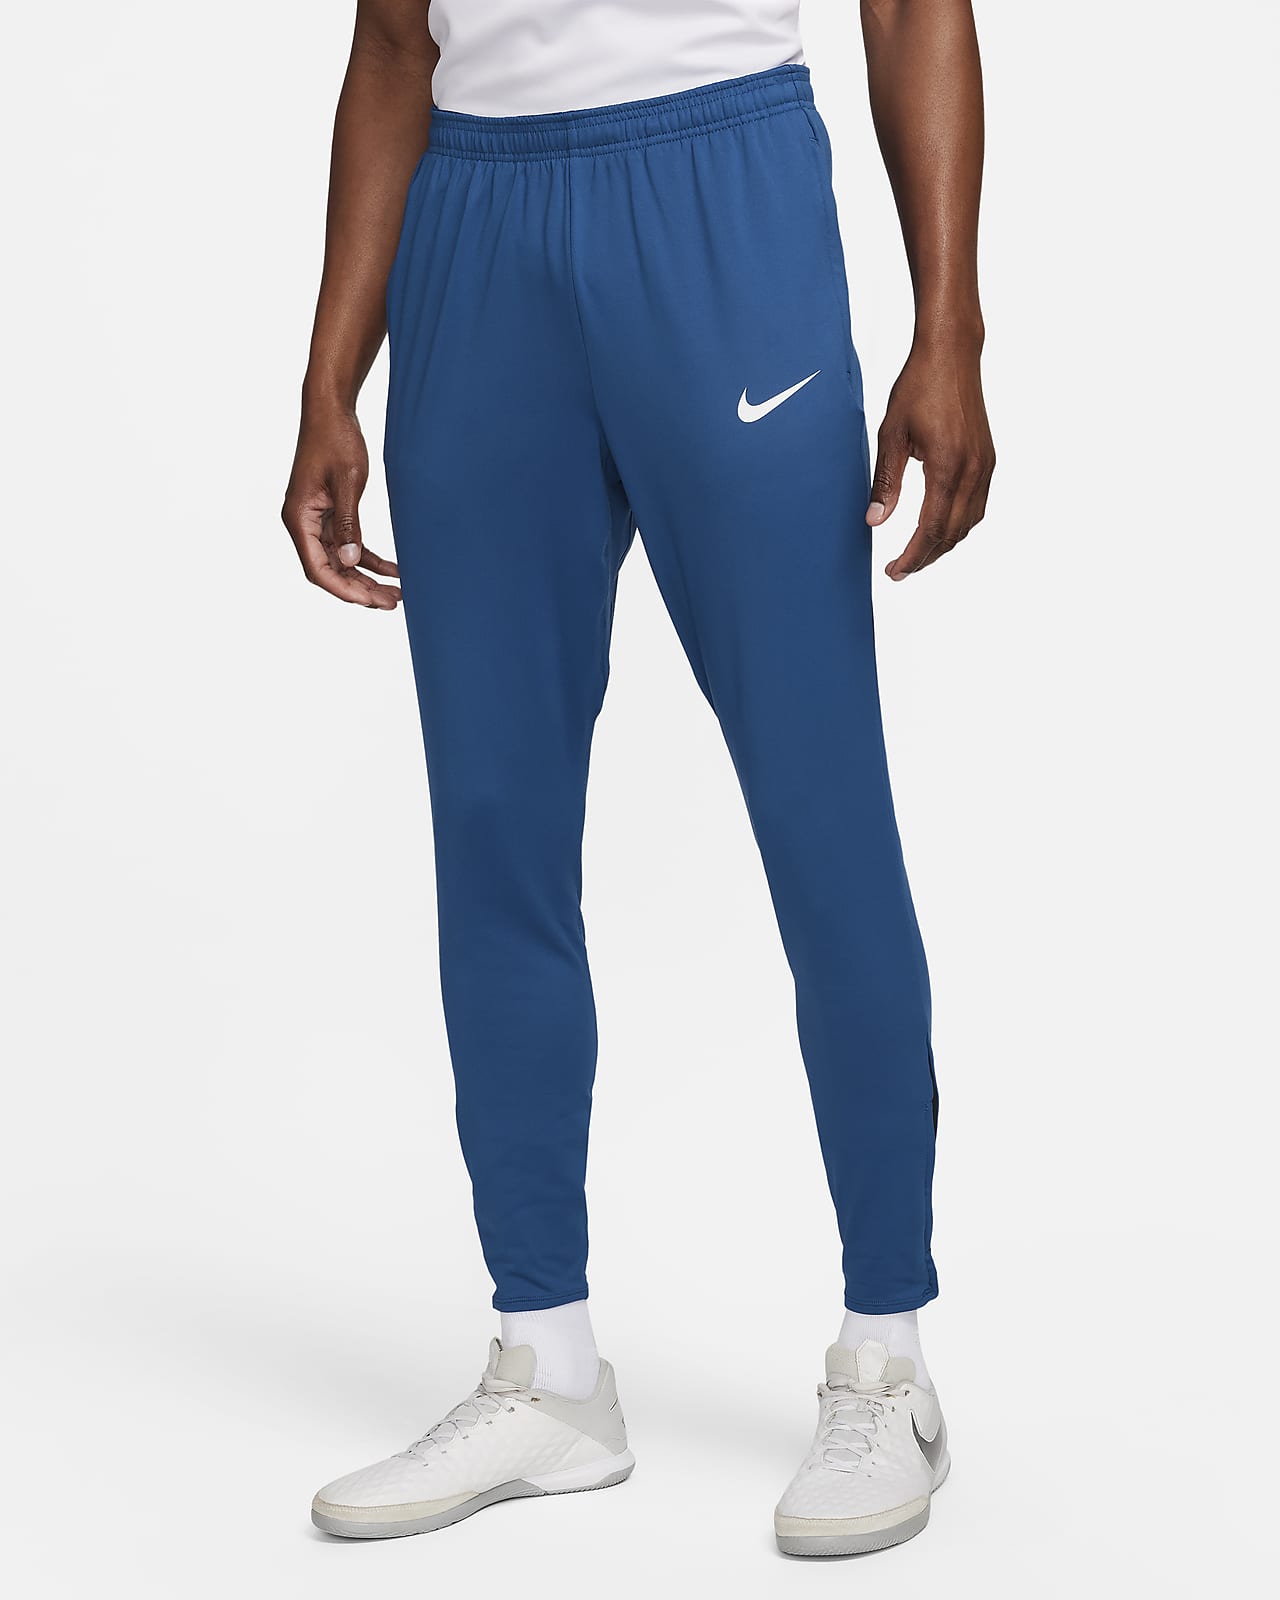 Nike Men's Dry Woven Training Pants - Macy's